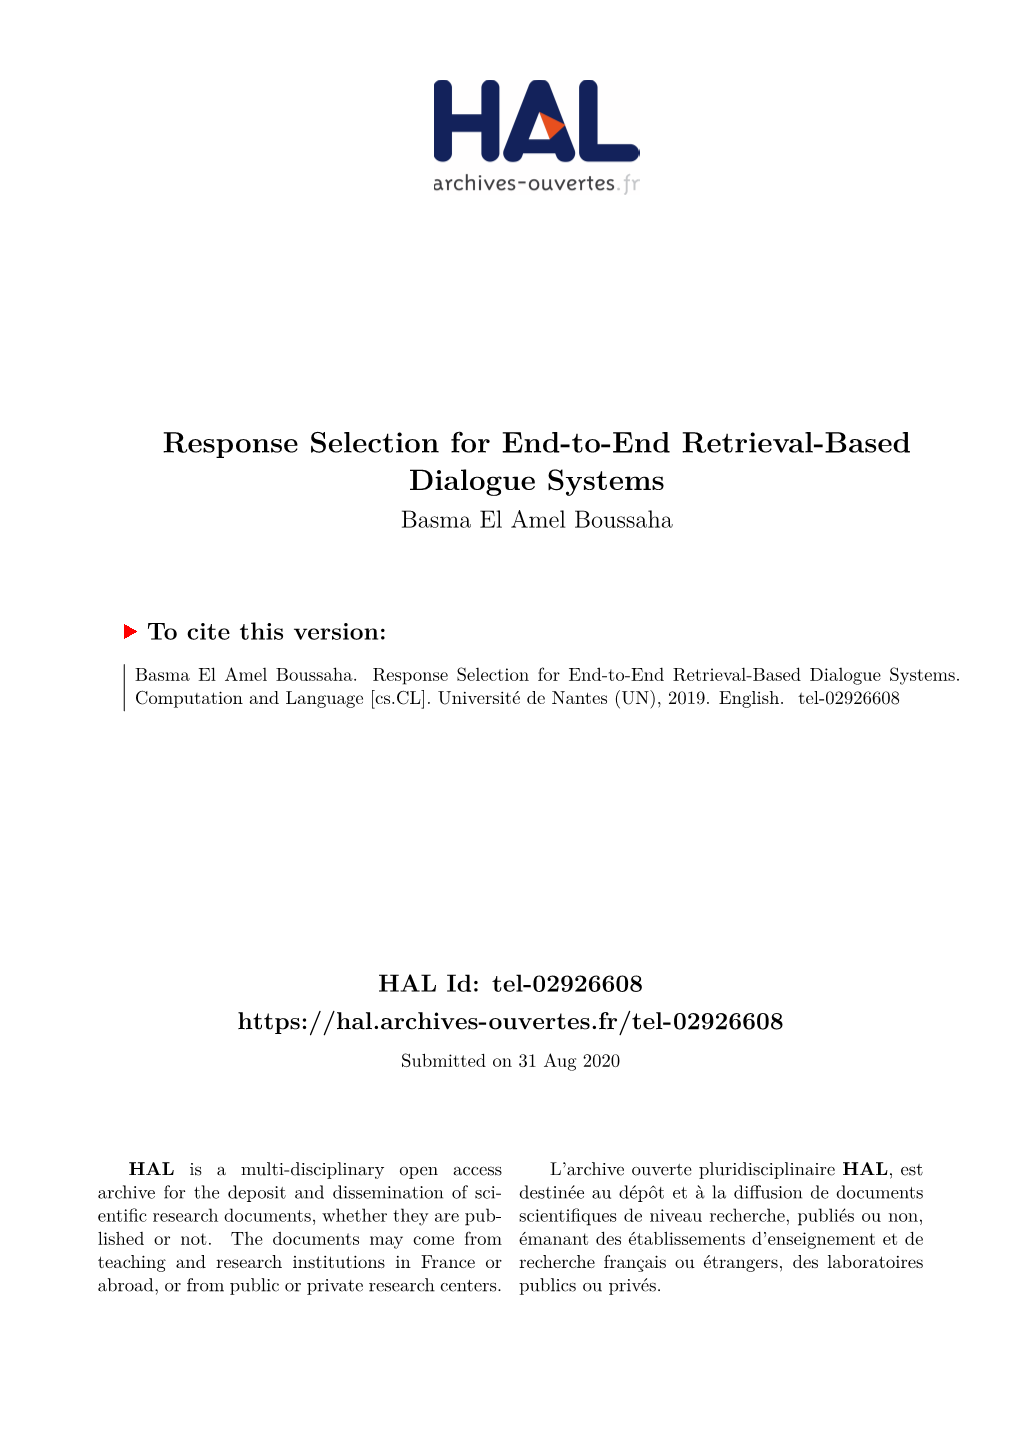 Response Selection for End-To-End Retrieval-Based Dialogue Systems Basma El Amel Boussaha